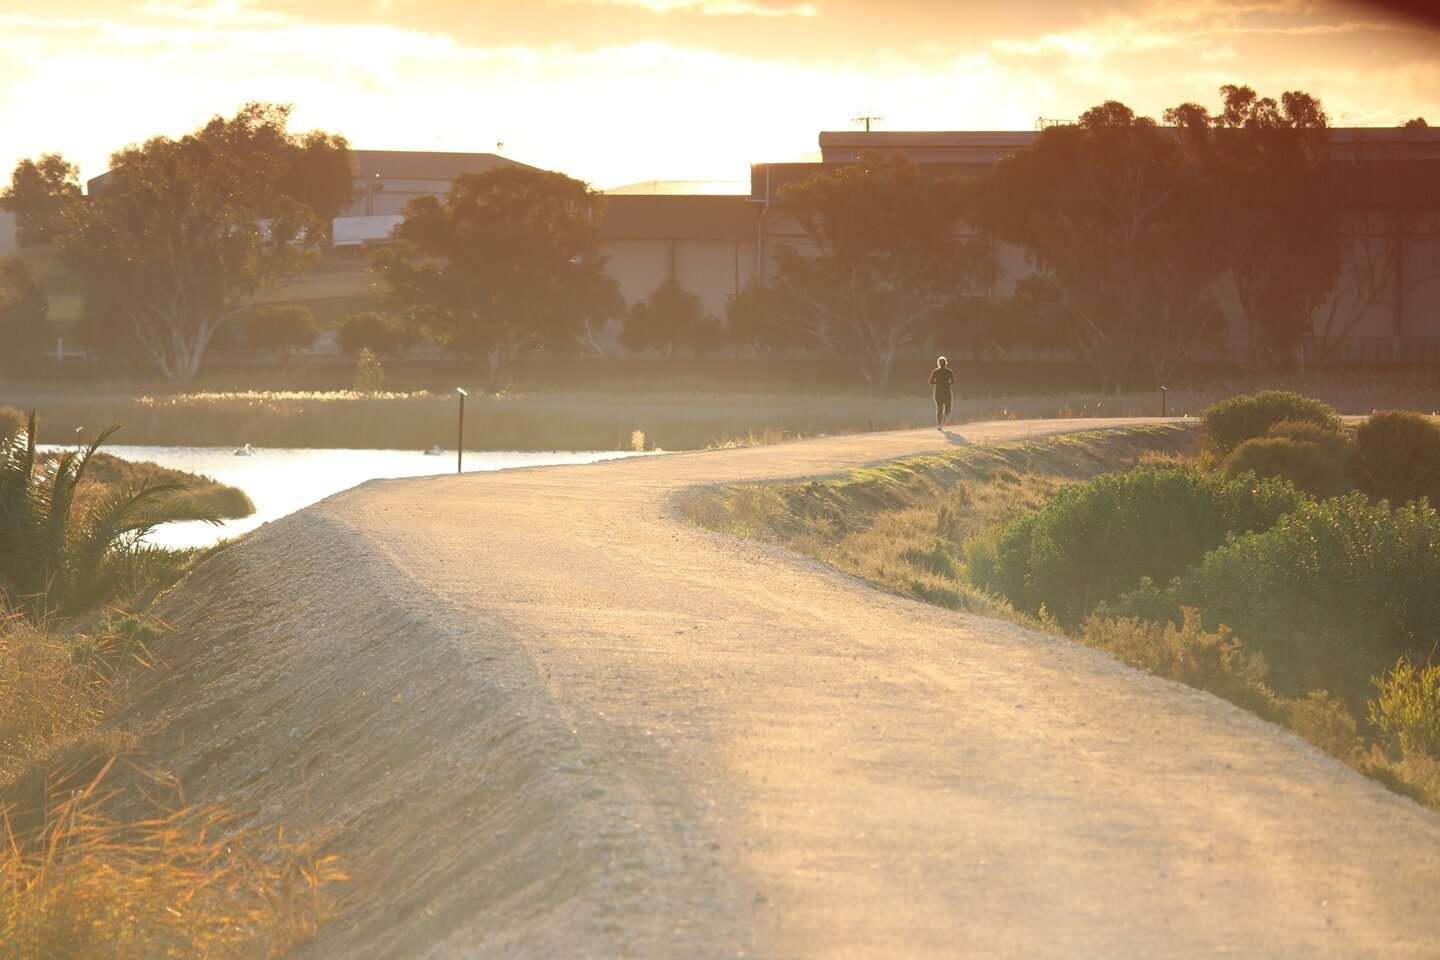 A scenic riverside walk or run is waiting for you at this year's Marathon Festival. 🏃&zwj;♂️🏃&zwj;♀️🏃🏃&zwj;♂️⁠ ⁠
⁠
Registrations close tomorrow! 👉 www.mmievents.com.au⁠
⁠
#murraylandsmultisports #murraybridgemarathon #murraybridge #southaustrali